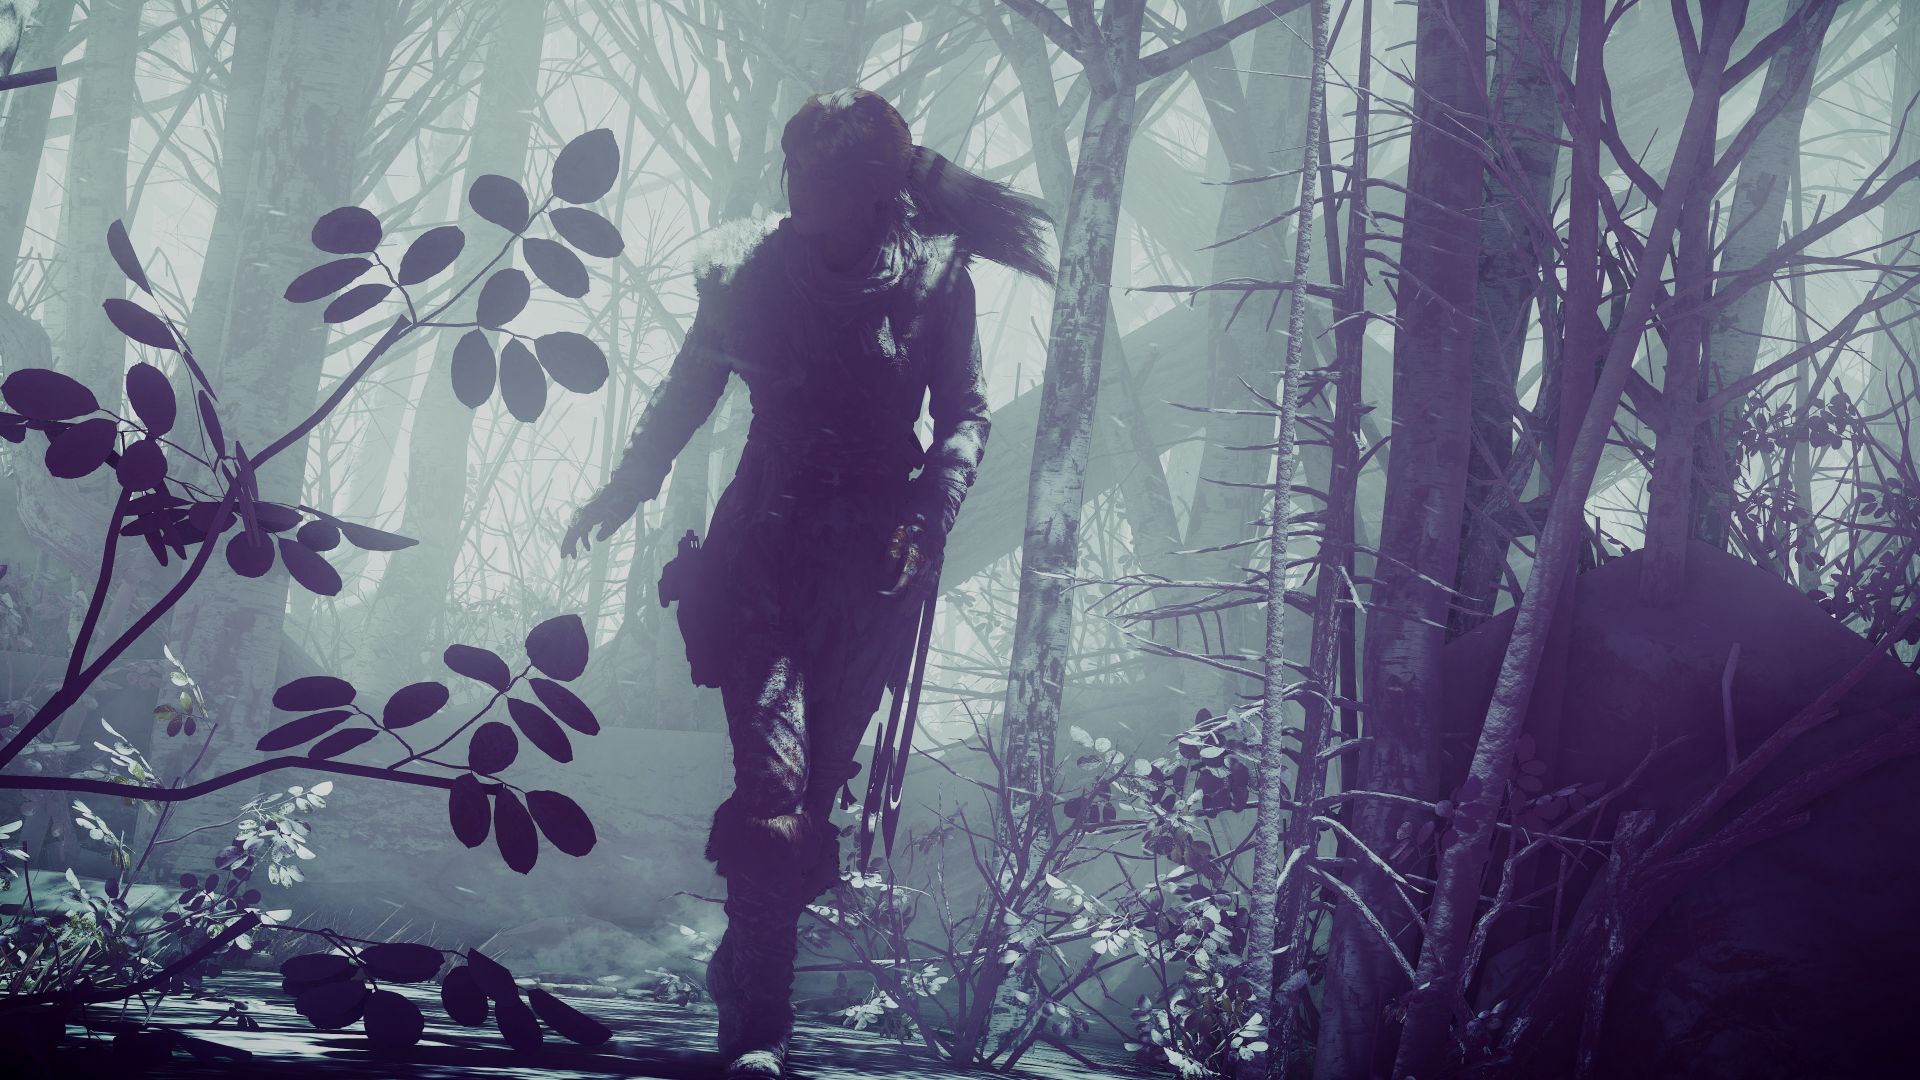 Wallpaper Lara croft, Rise of the Tomb Raider, 2015 game